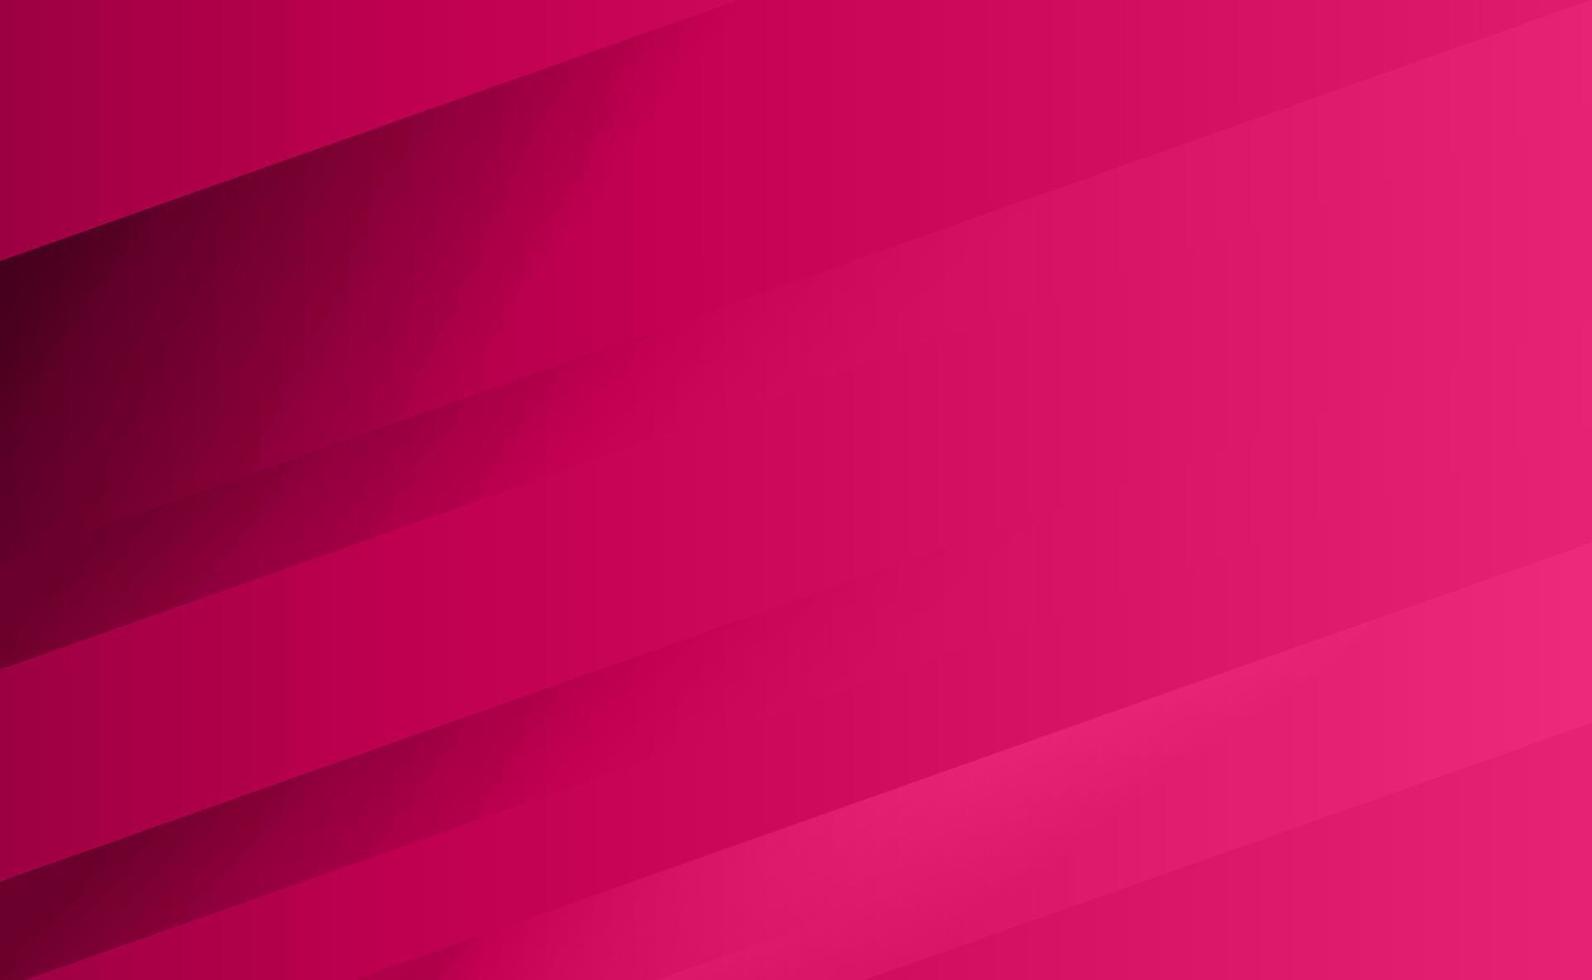 rosa kostenloses Hintergrunddesign vektor